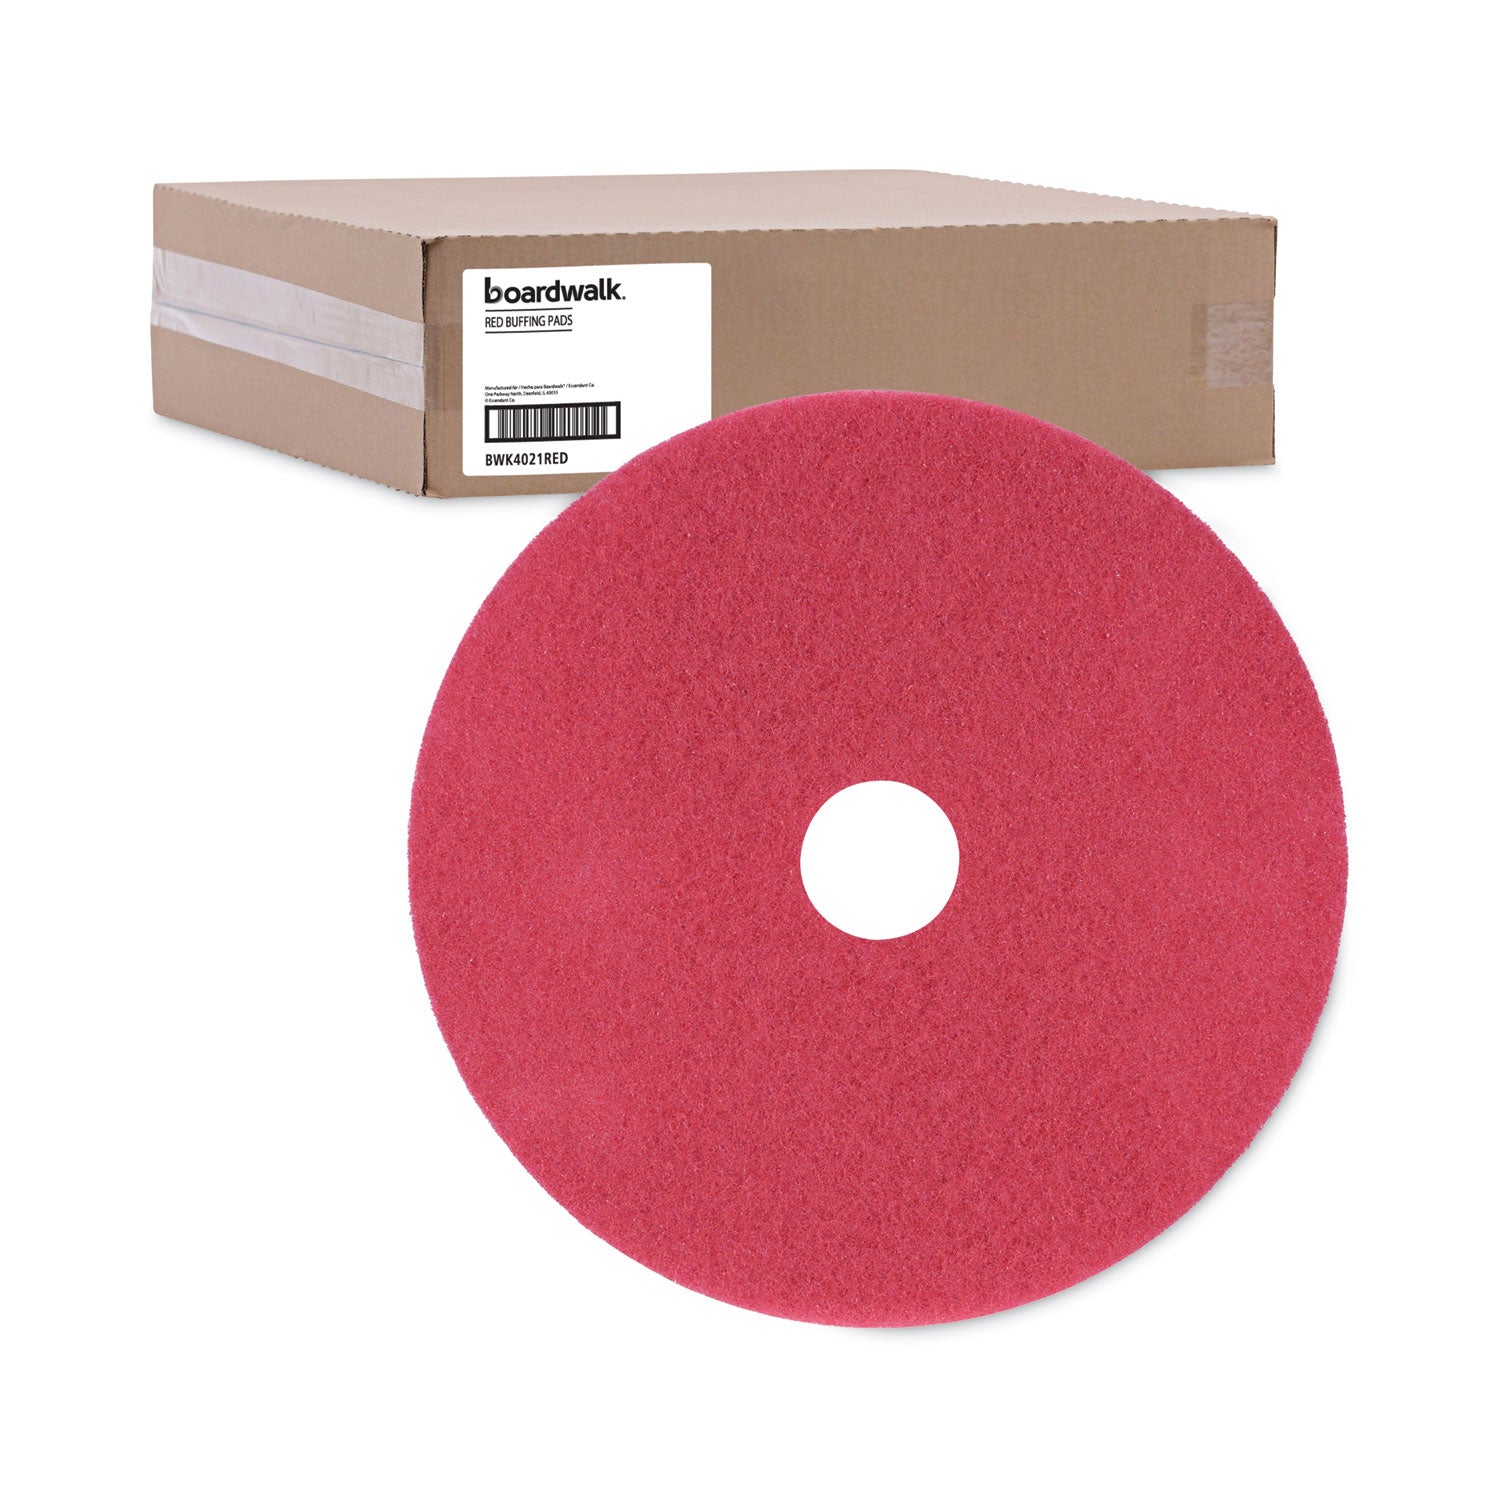 buffing-floor-pads-21-diameter-red-5-carton_bwk4021red - 5